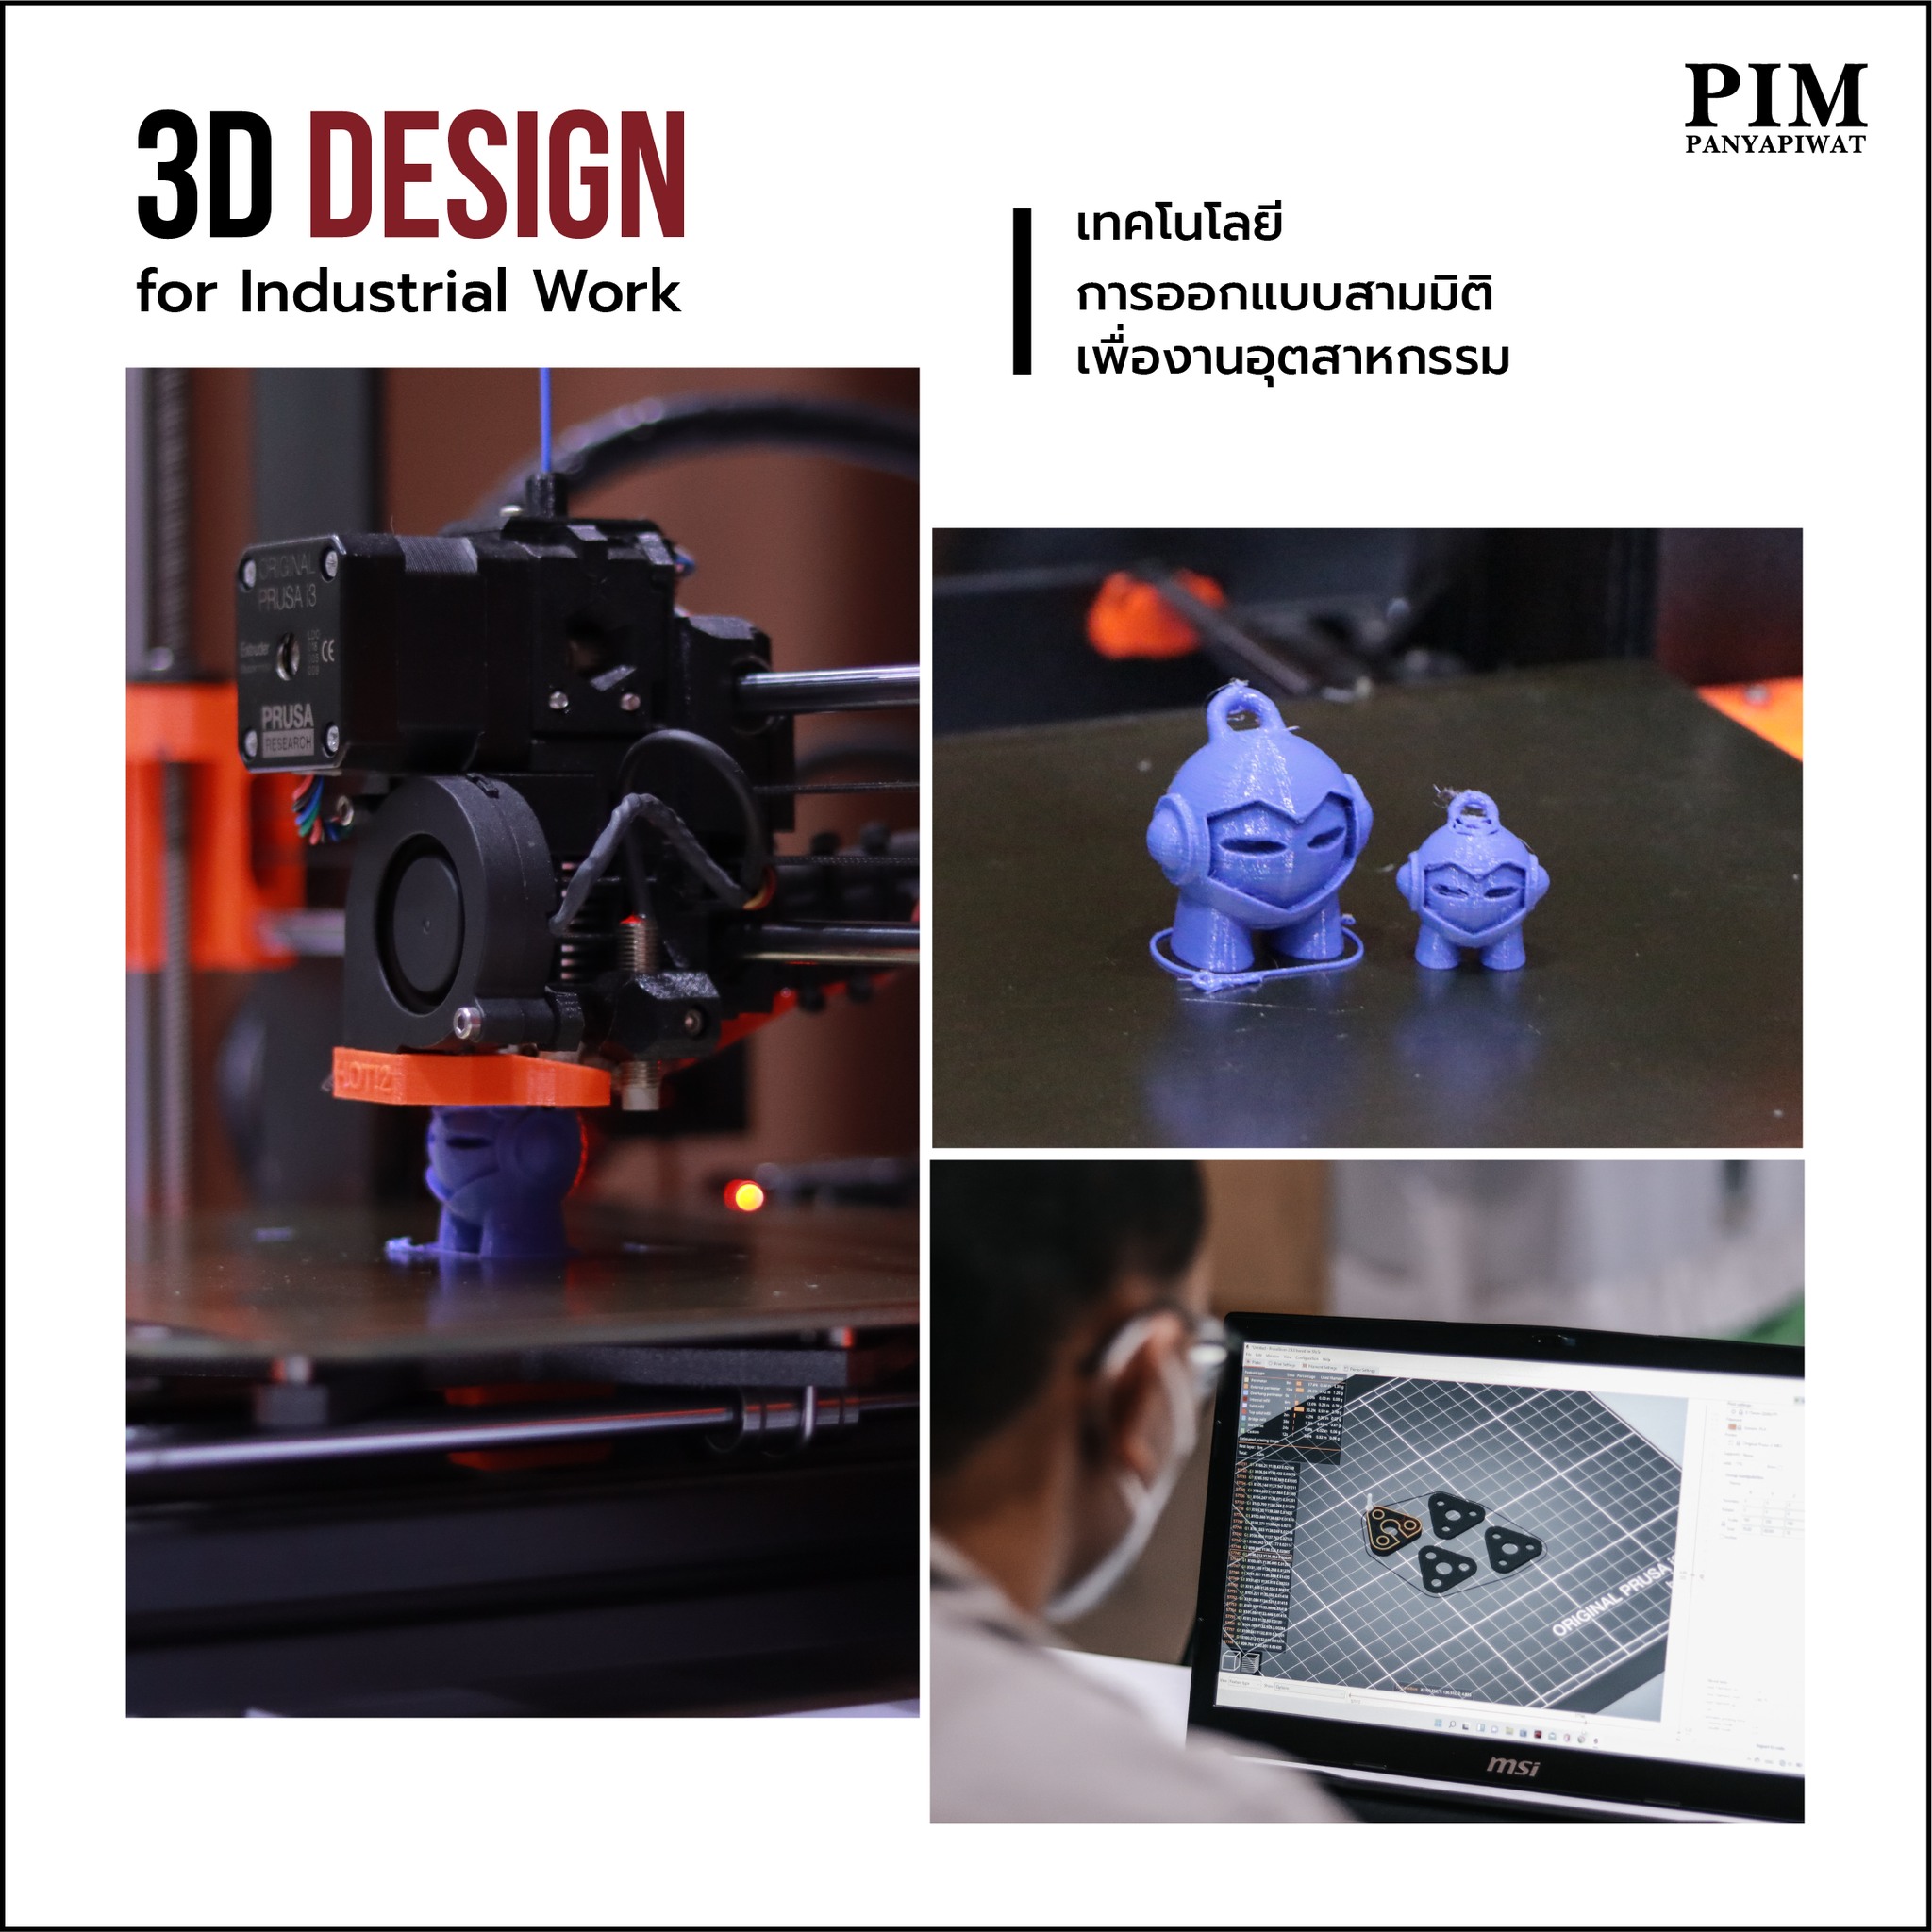 3D Design for Industrial Work เทคโนโลยีการออกแบบสามมิติเพื่องานอุตสาหกรรม